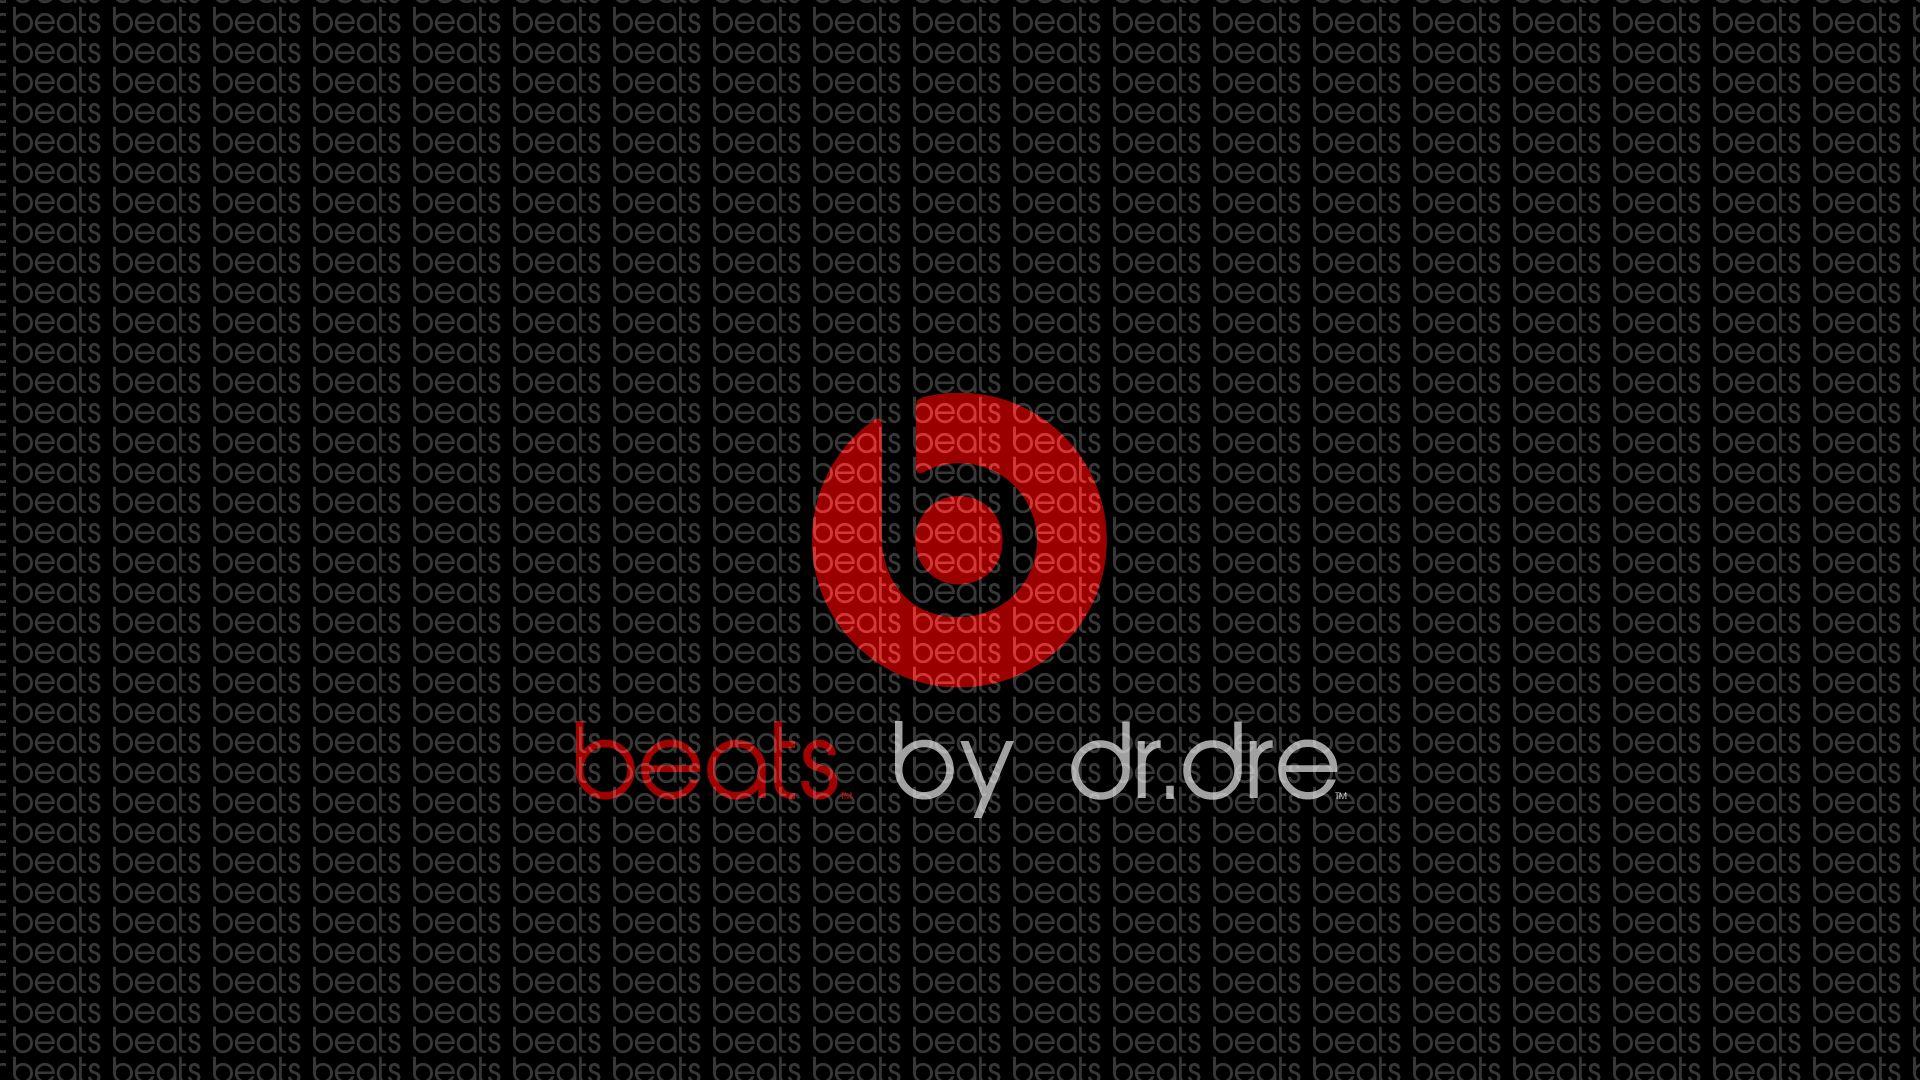 Blue Beats Logo - Beats by Dre Logo wallpaper | 1920x1080 | #27597